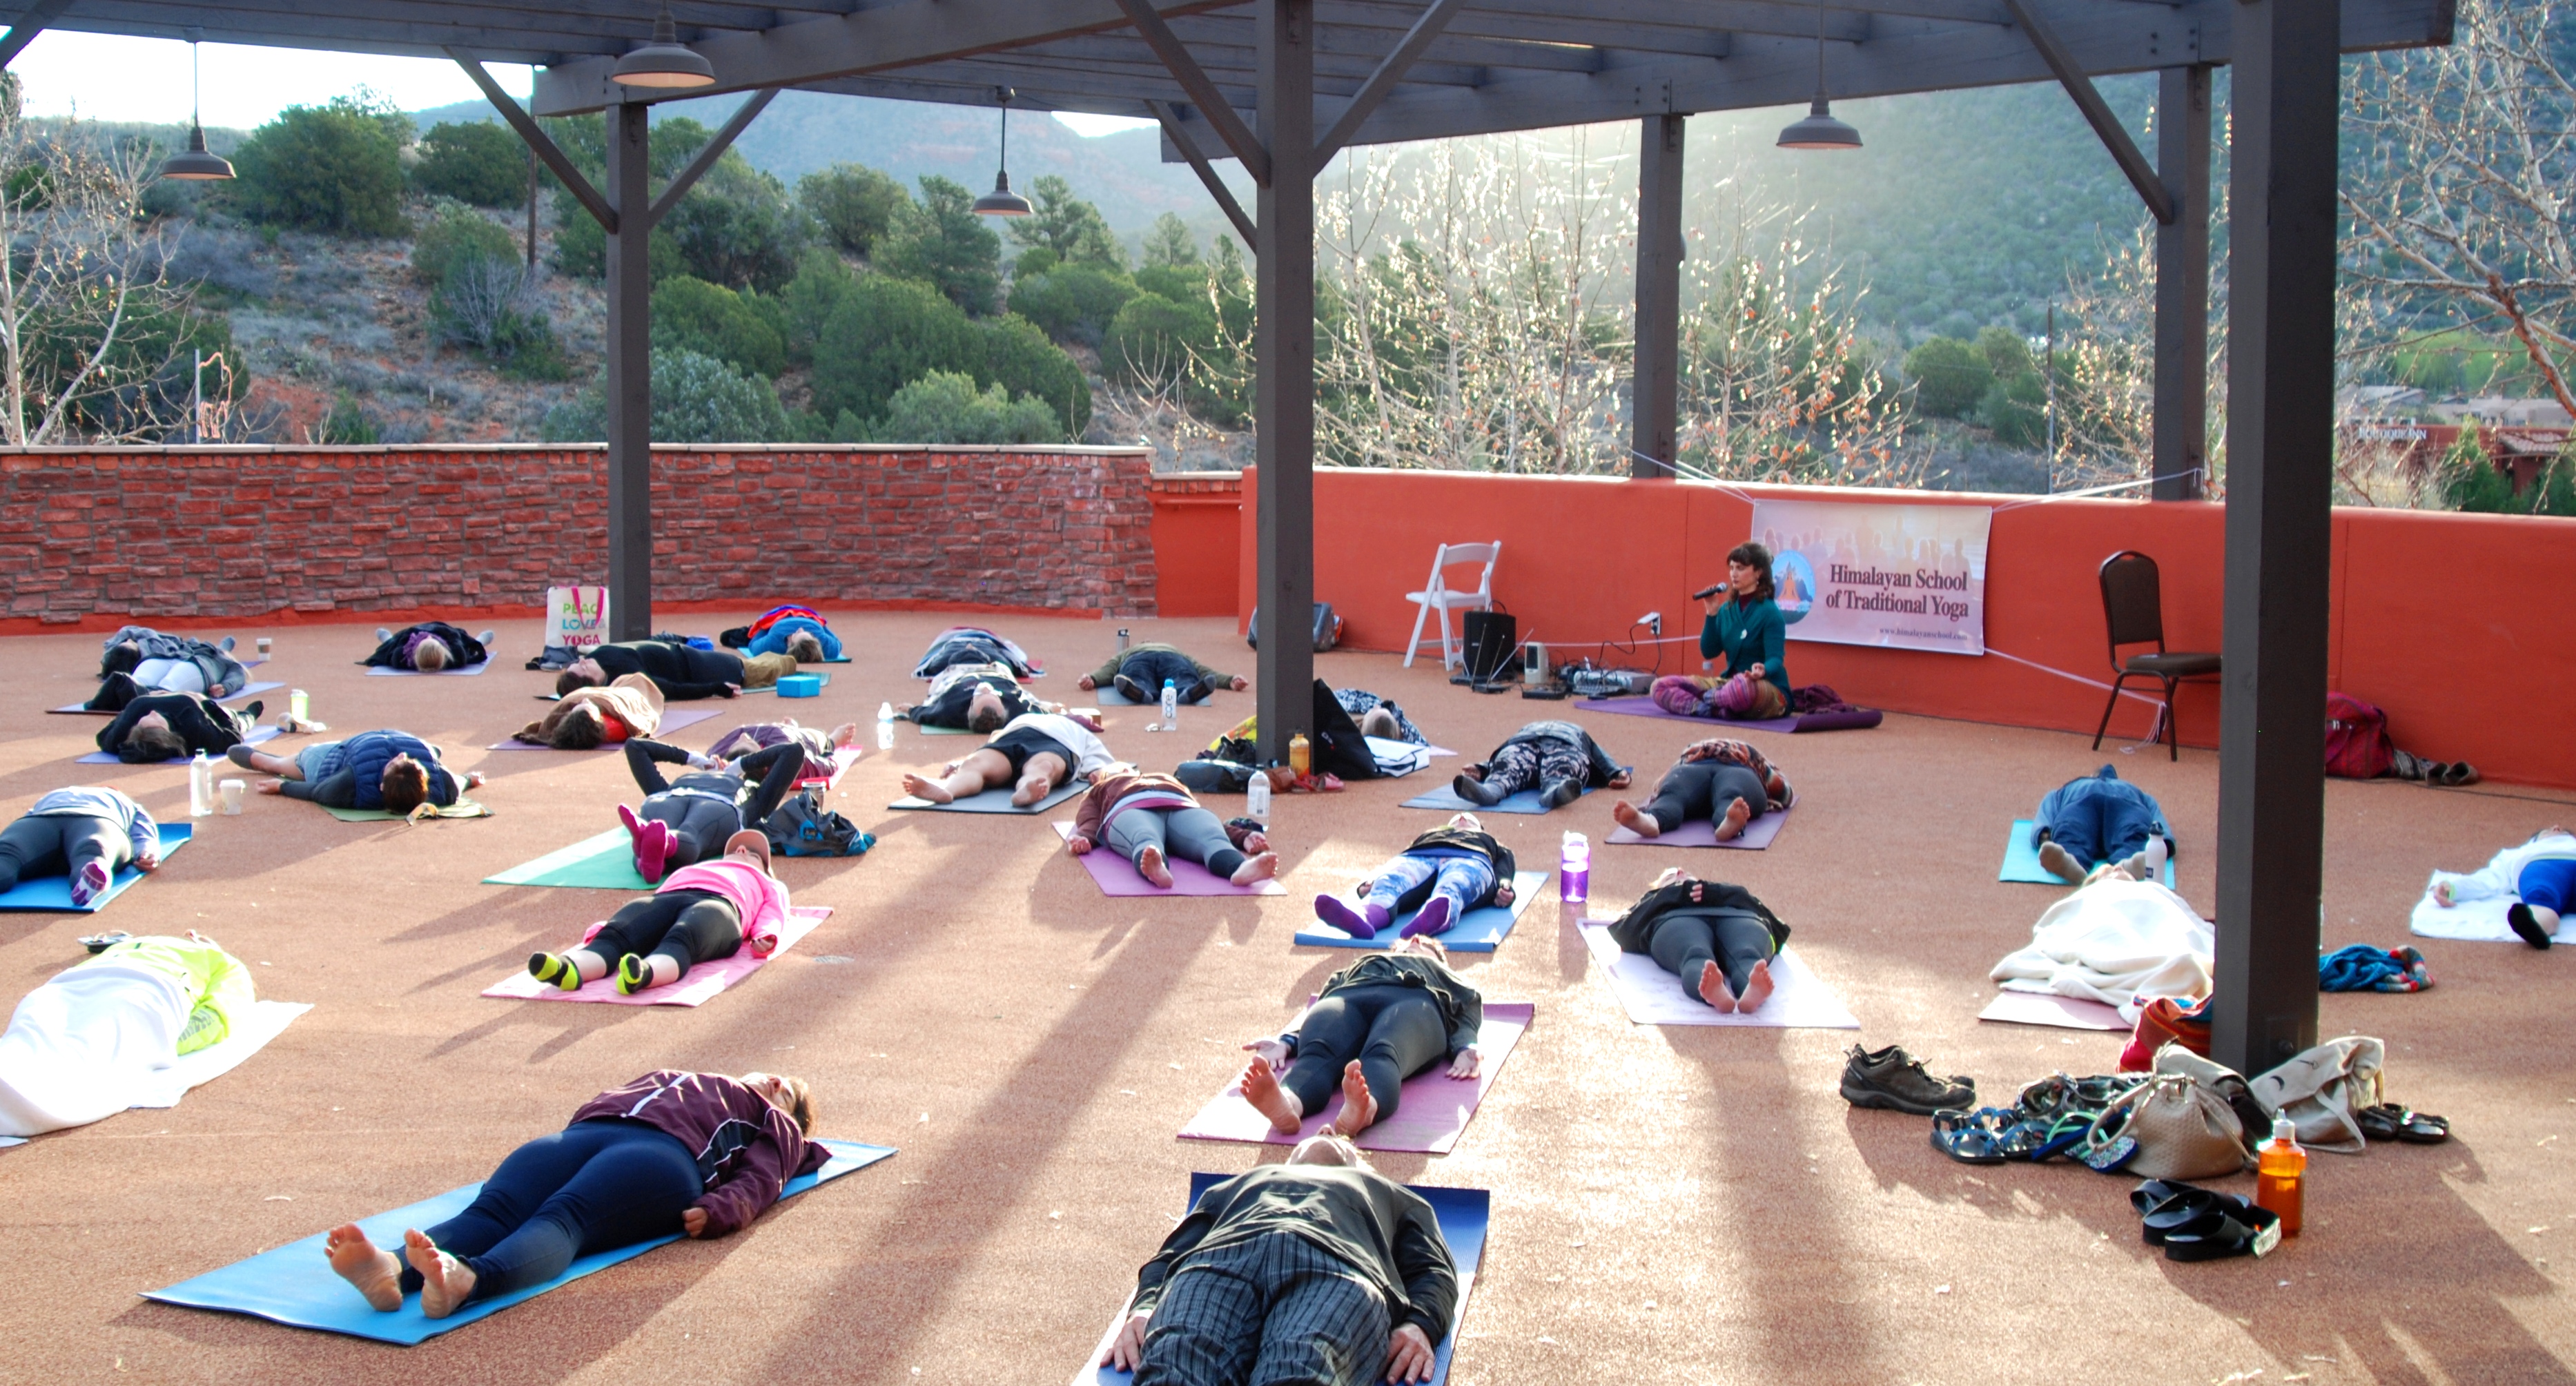 Pic 10 - Devi leading group into Yoga Nidra - bliss